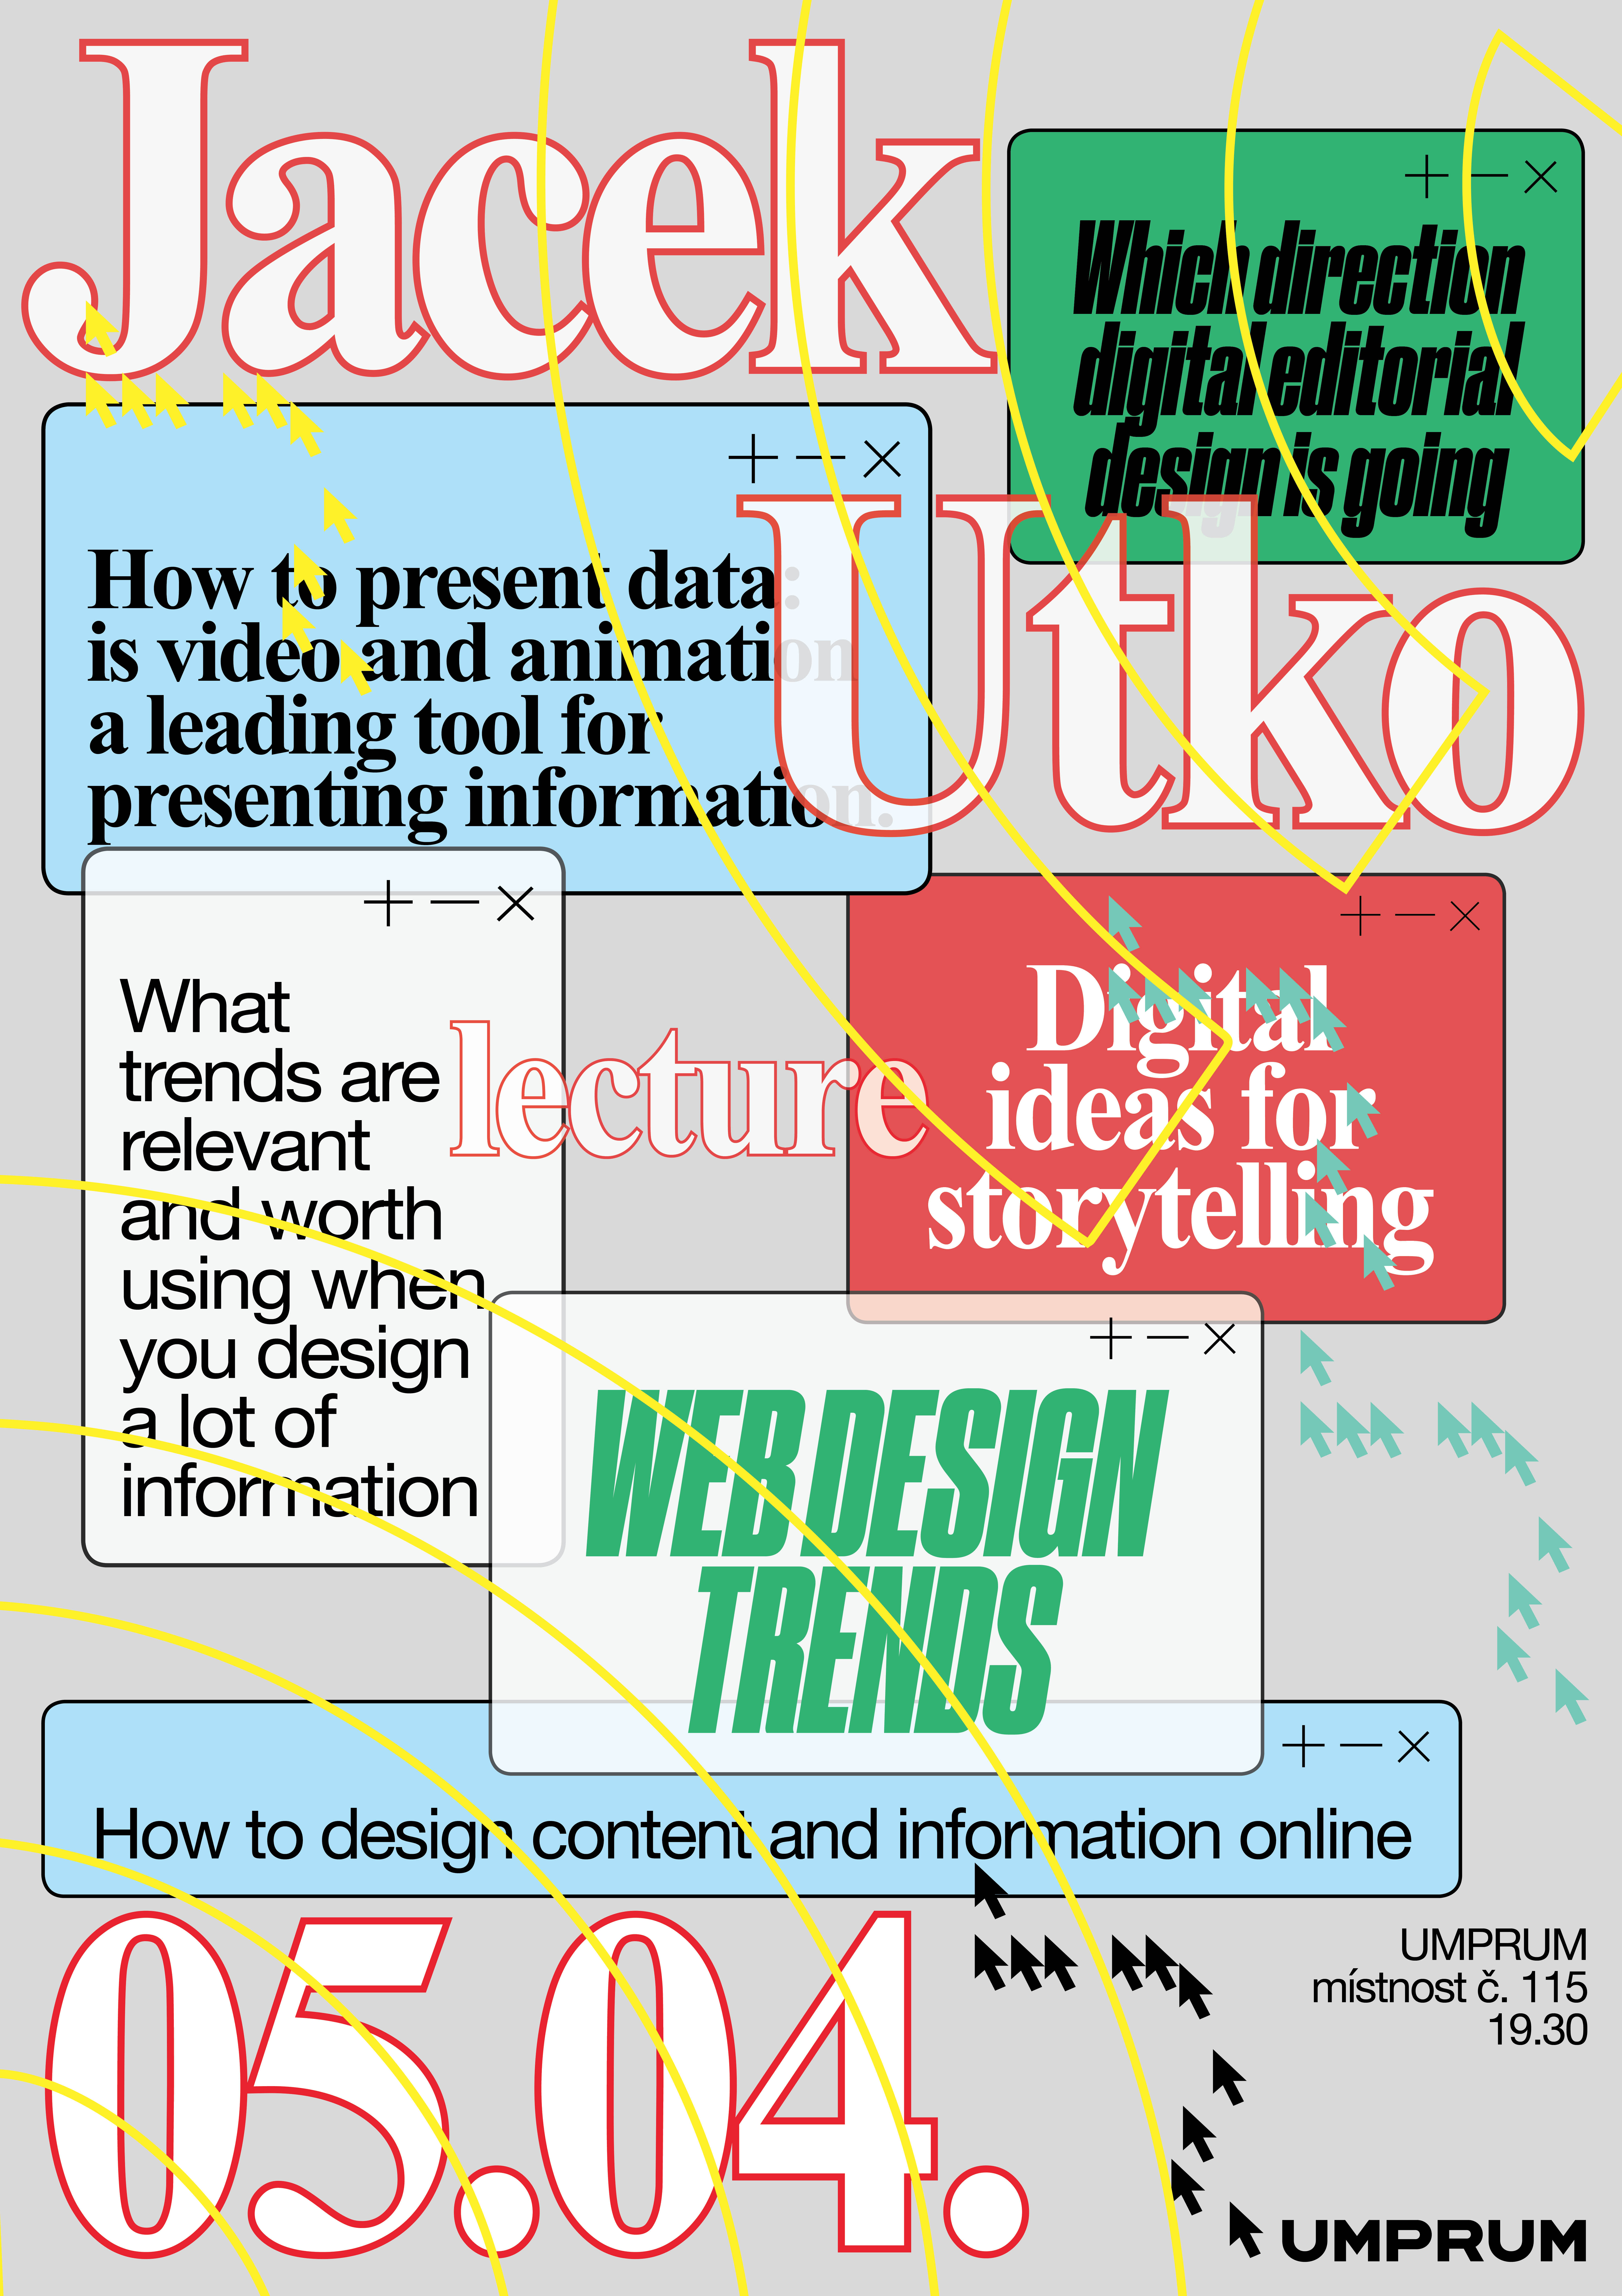 Jacek Utko - Web design trends: How to design content and information online